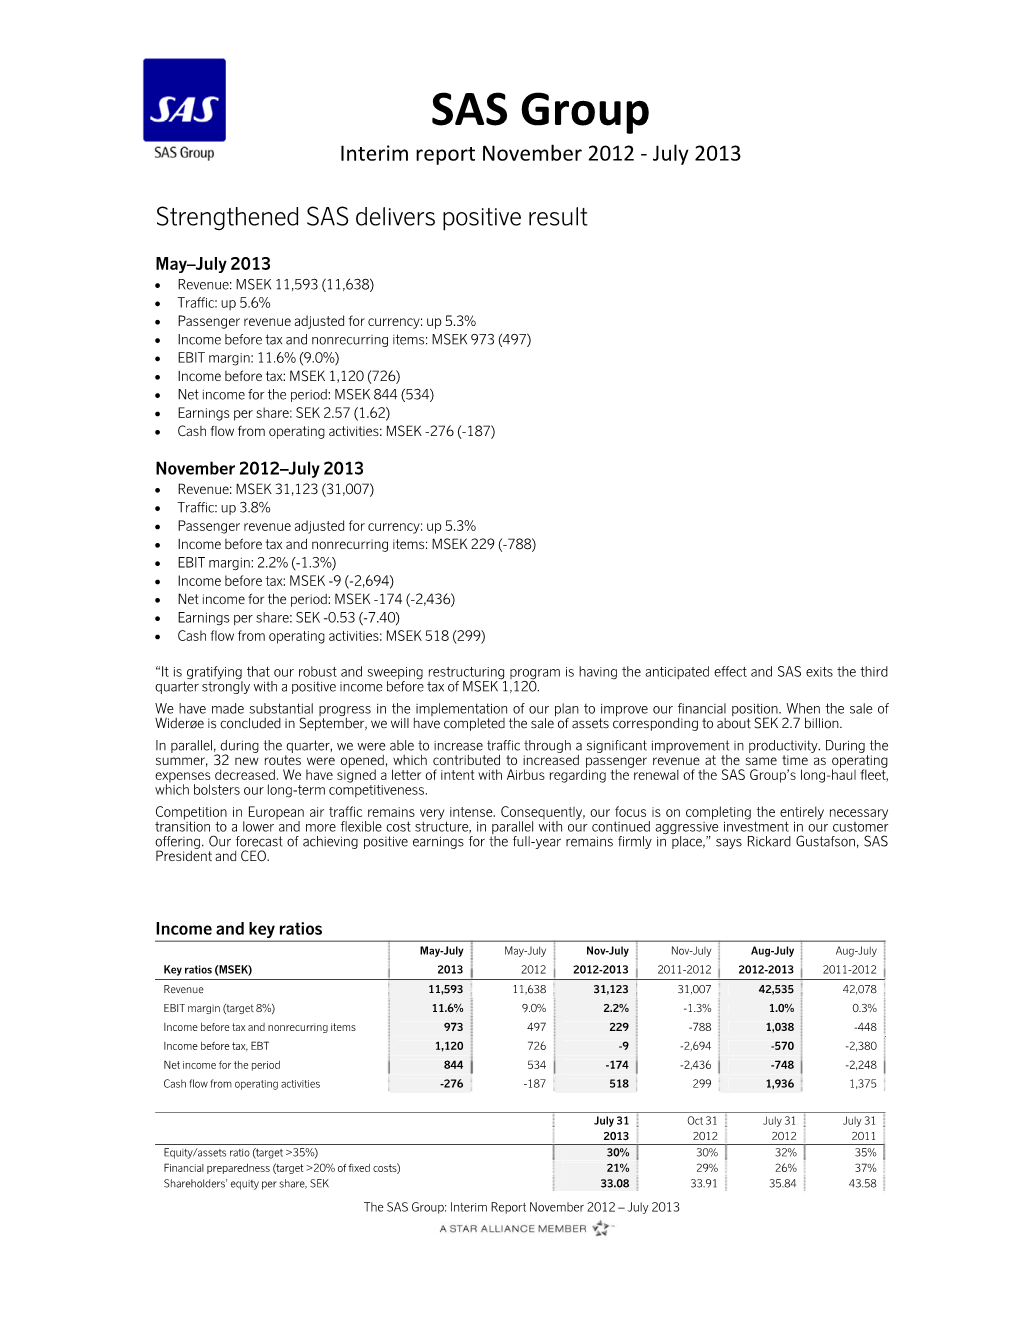 SAS Group Interim Report November 2012 ‐ July 2013